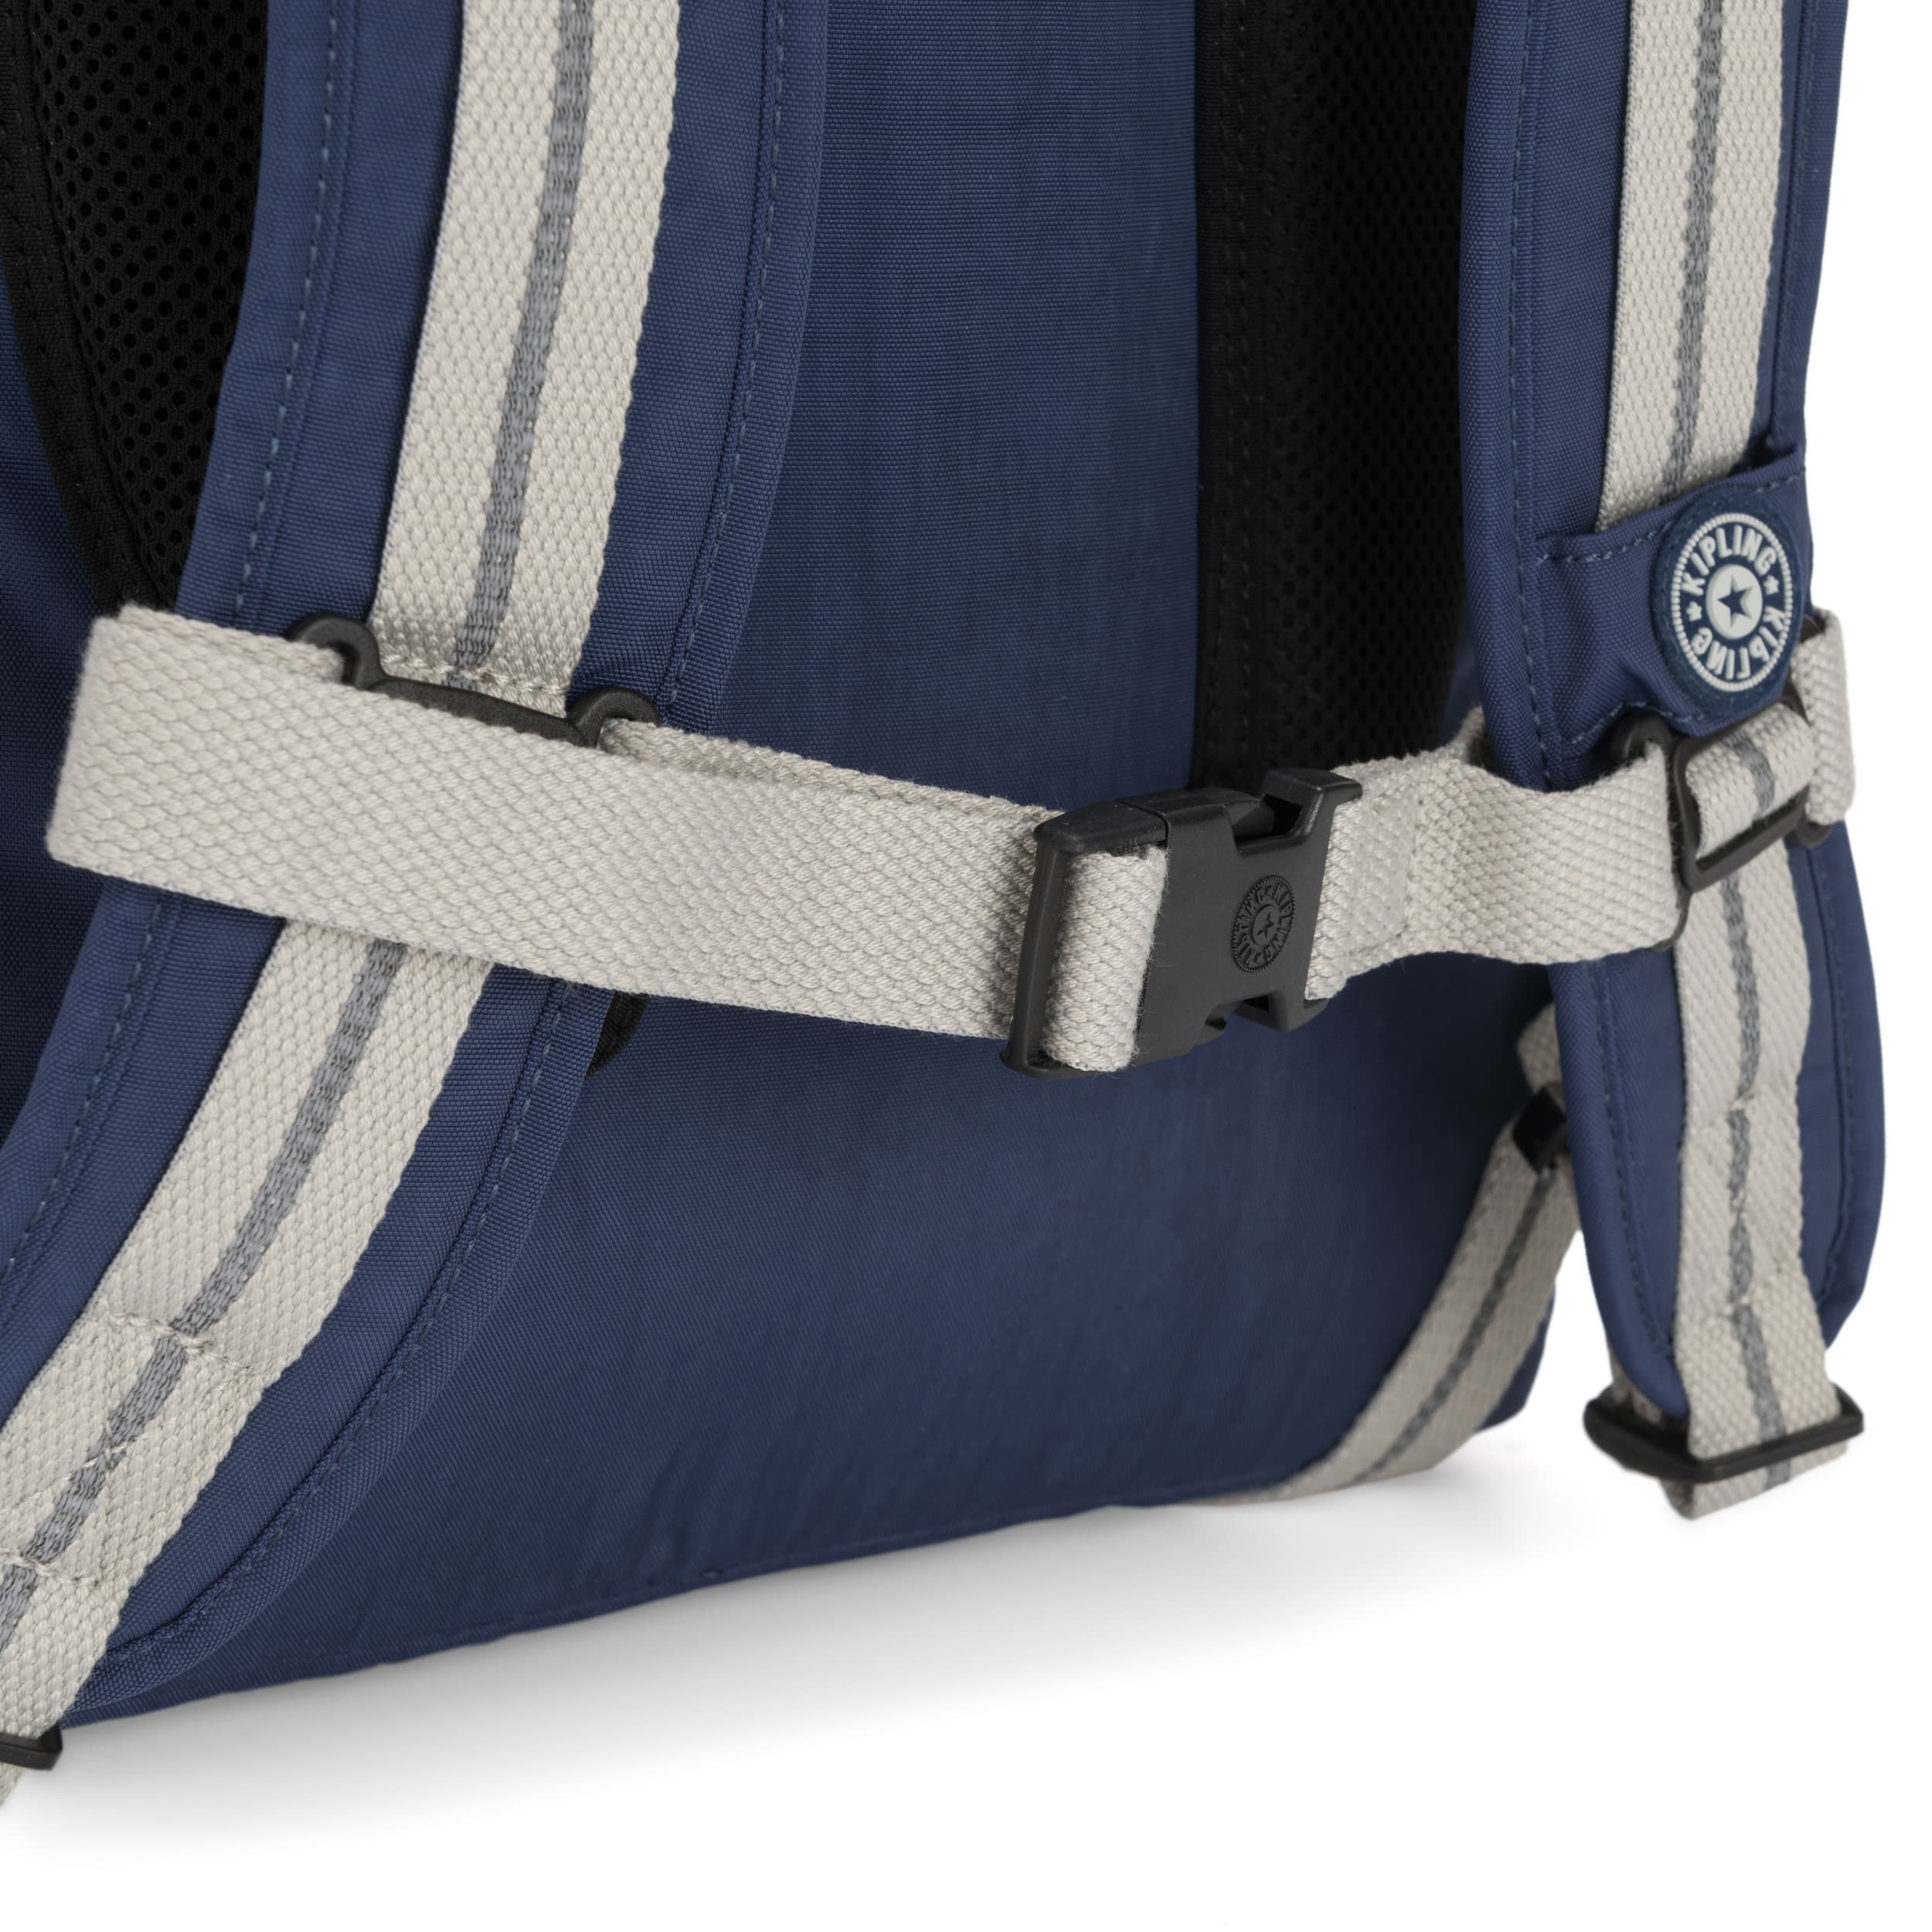 Kipling-Upgrade-Large Backpack With Laptop Protection -Blue Thunder-16199-54J